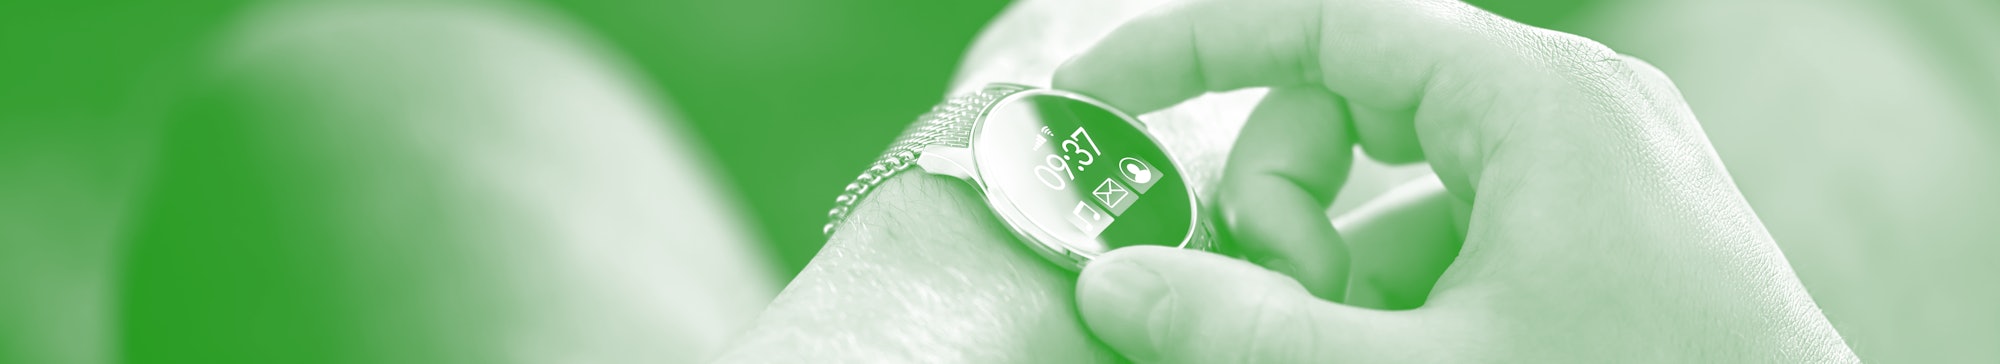 Smart watch, wearable gadget. Man wearing hybrid smartwatch. Wearables with digital touchscreen and ...